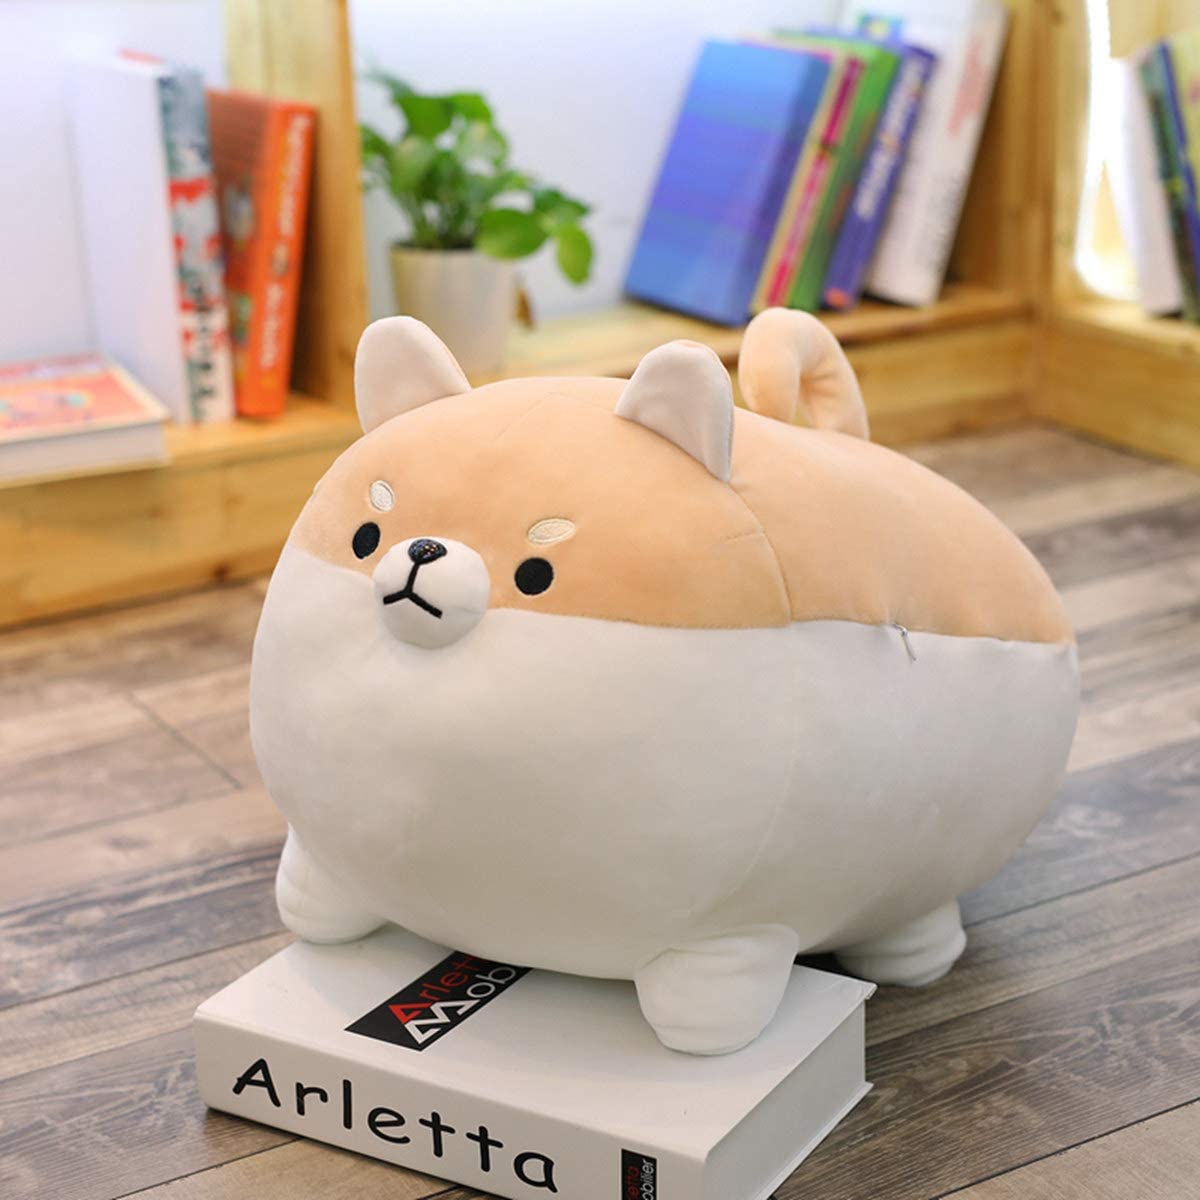 ARELUX Stuffed Animal Shiba Inu Plush Pillow,Soft Corgi Dog Anime Plushies Japanese Cuddle Pet Throw Pillow,Kawaii Plush Toy Gifts for Boys Girls Kids Birthday